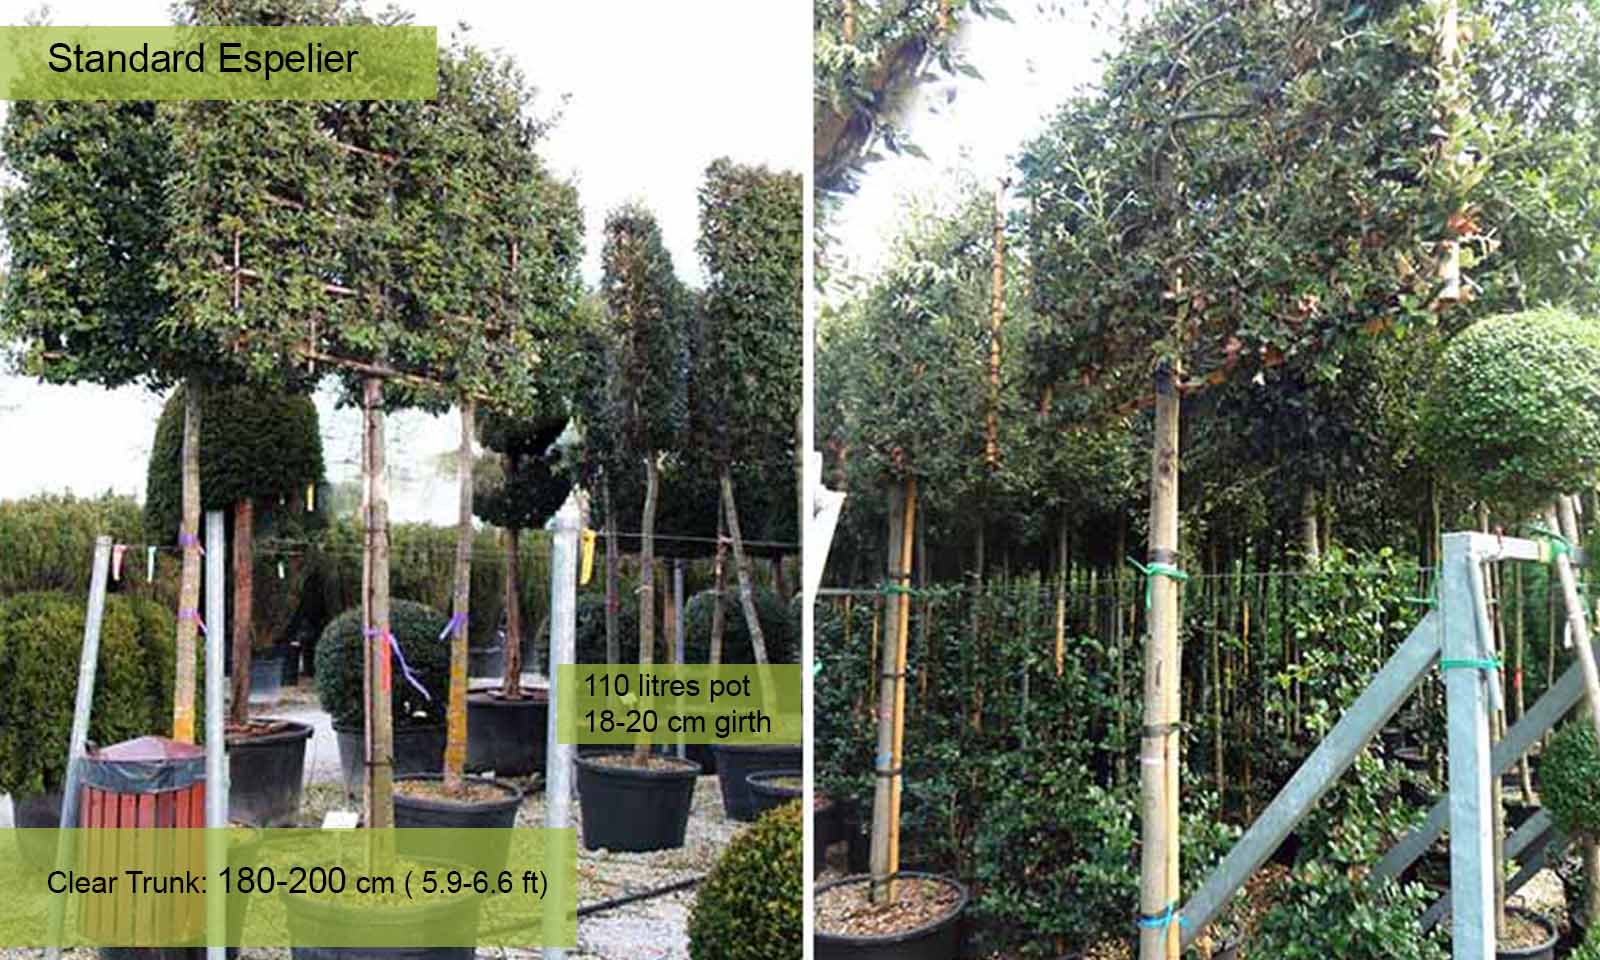 Quercus Ilex (Holm Oak / Evergreen Oak) - Standard Espalier